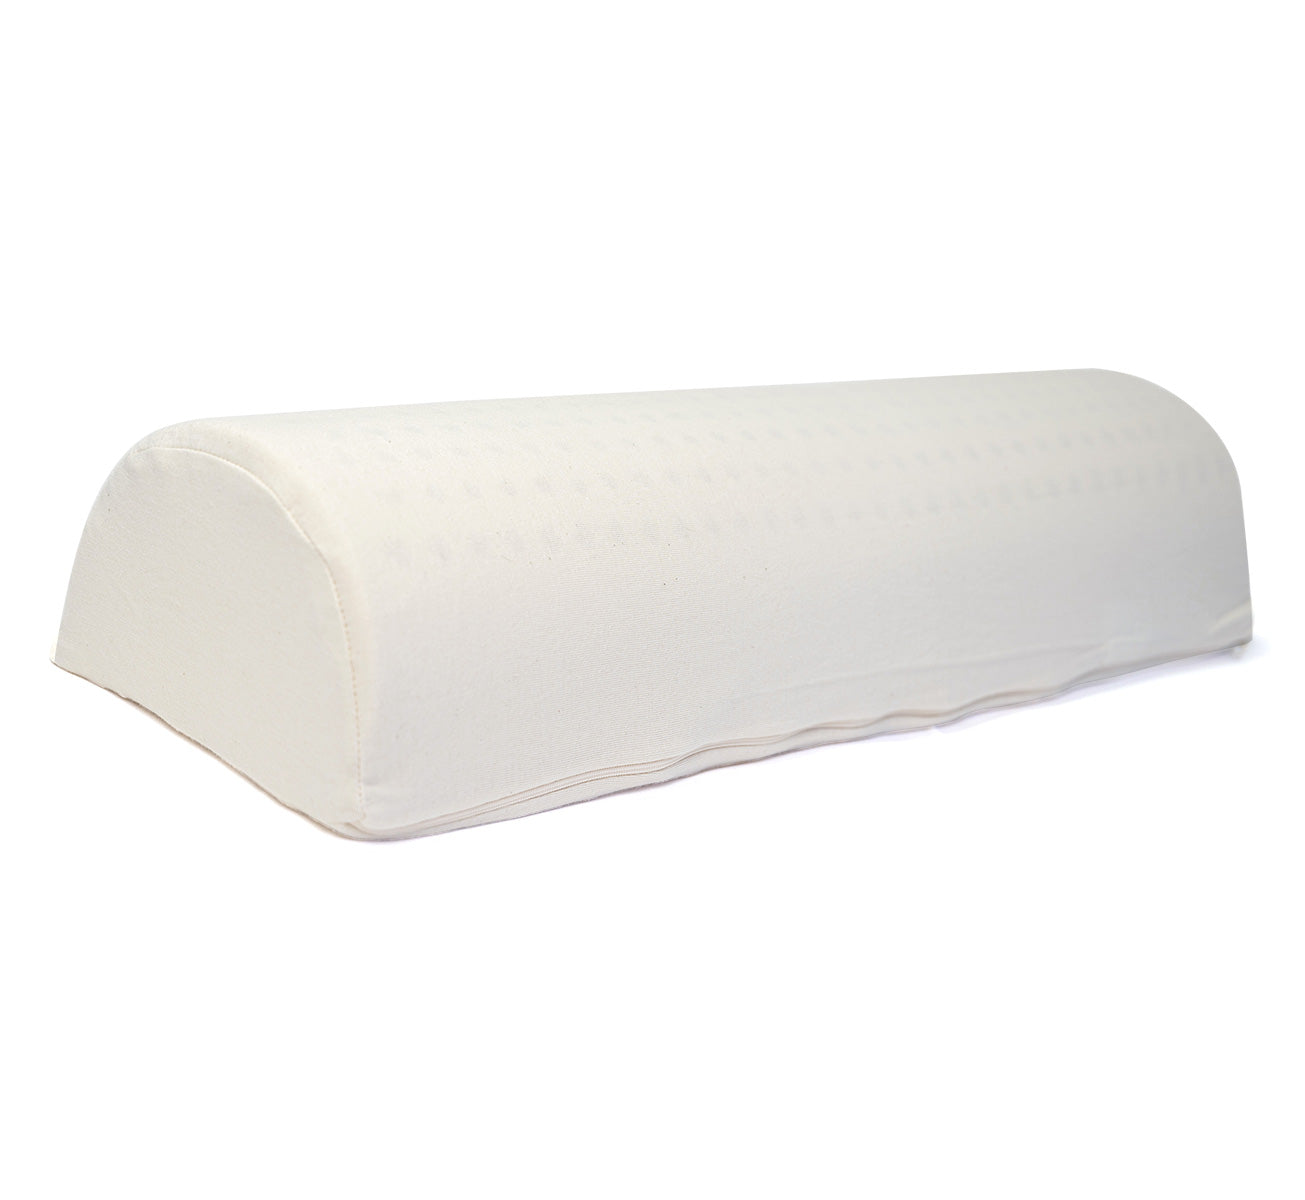 Knee Pillow Sleeping HALF MOON Cushion Side Foam Back Support Pain Relief  Pillow